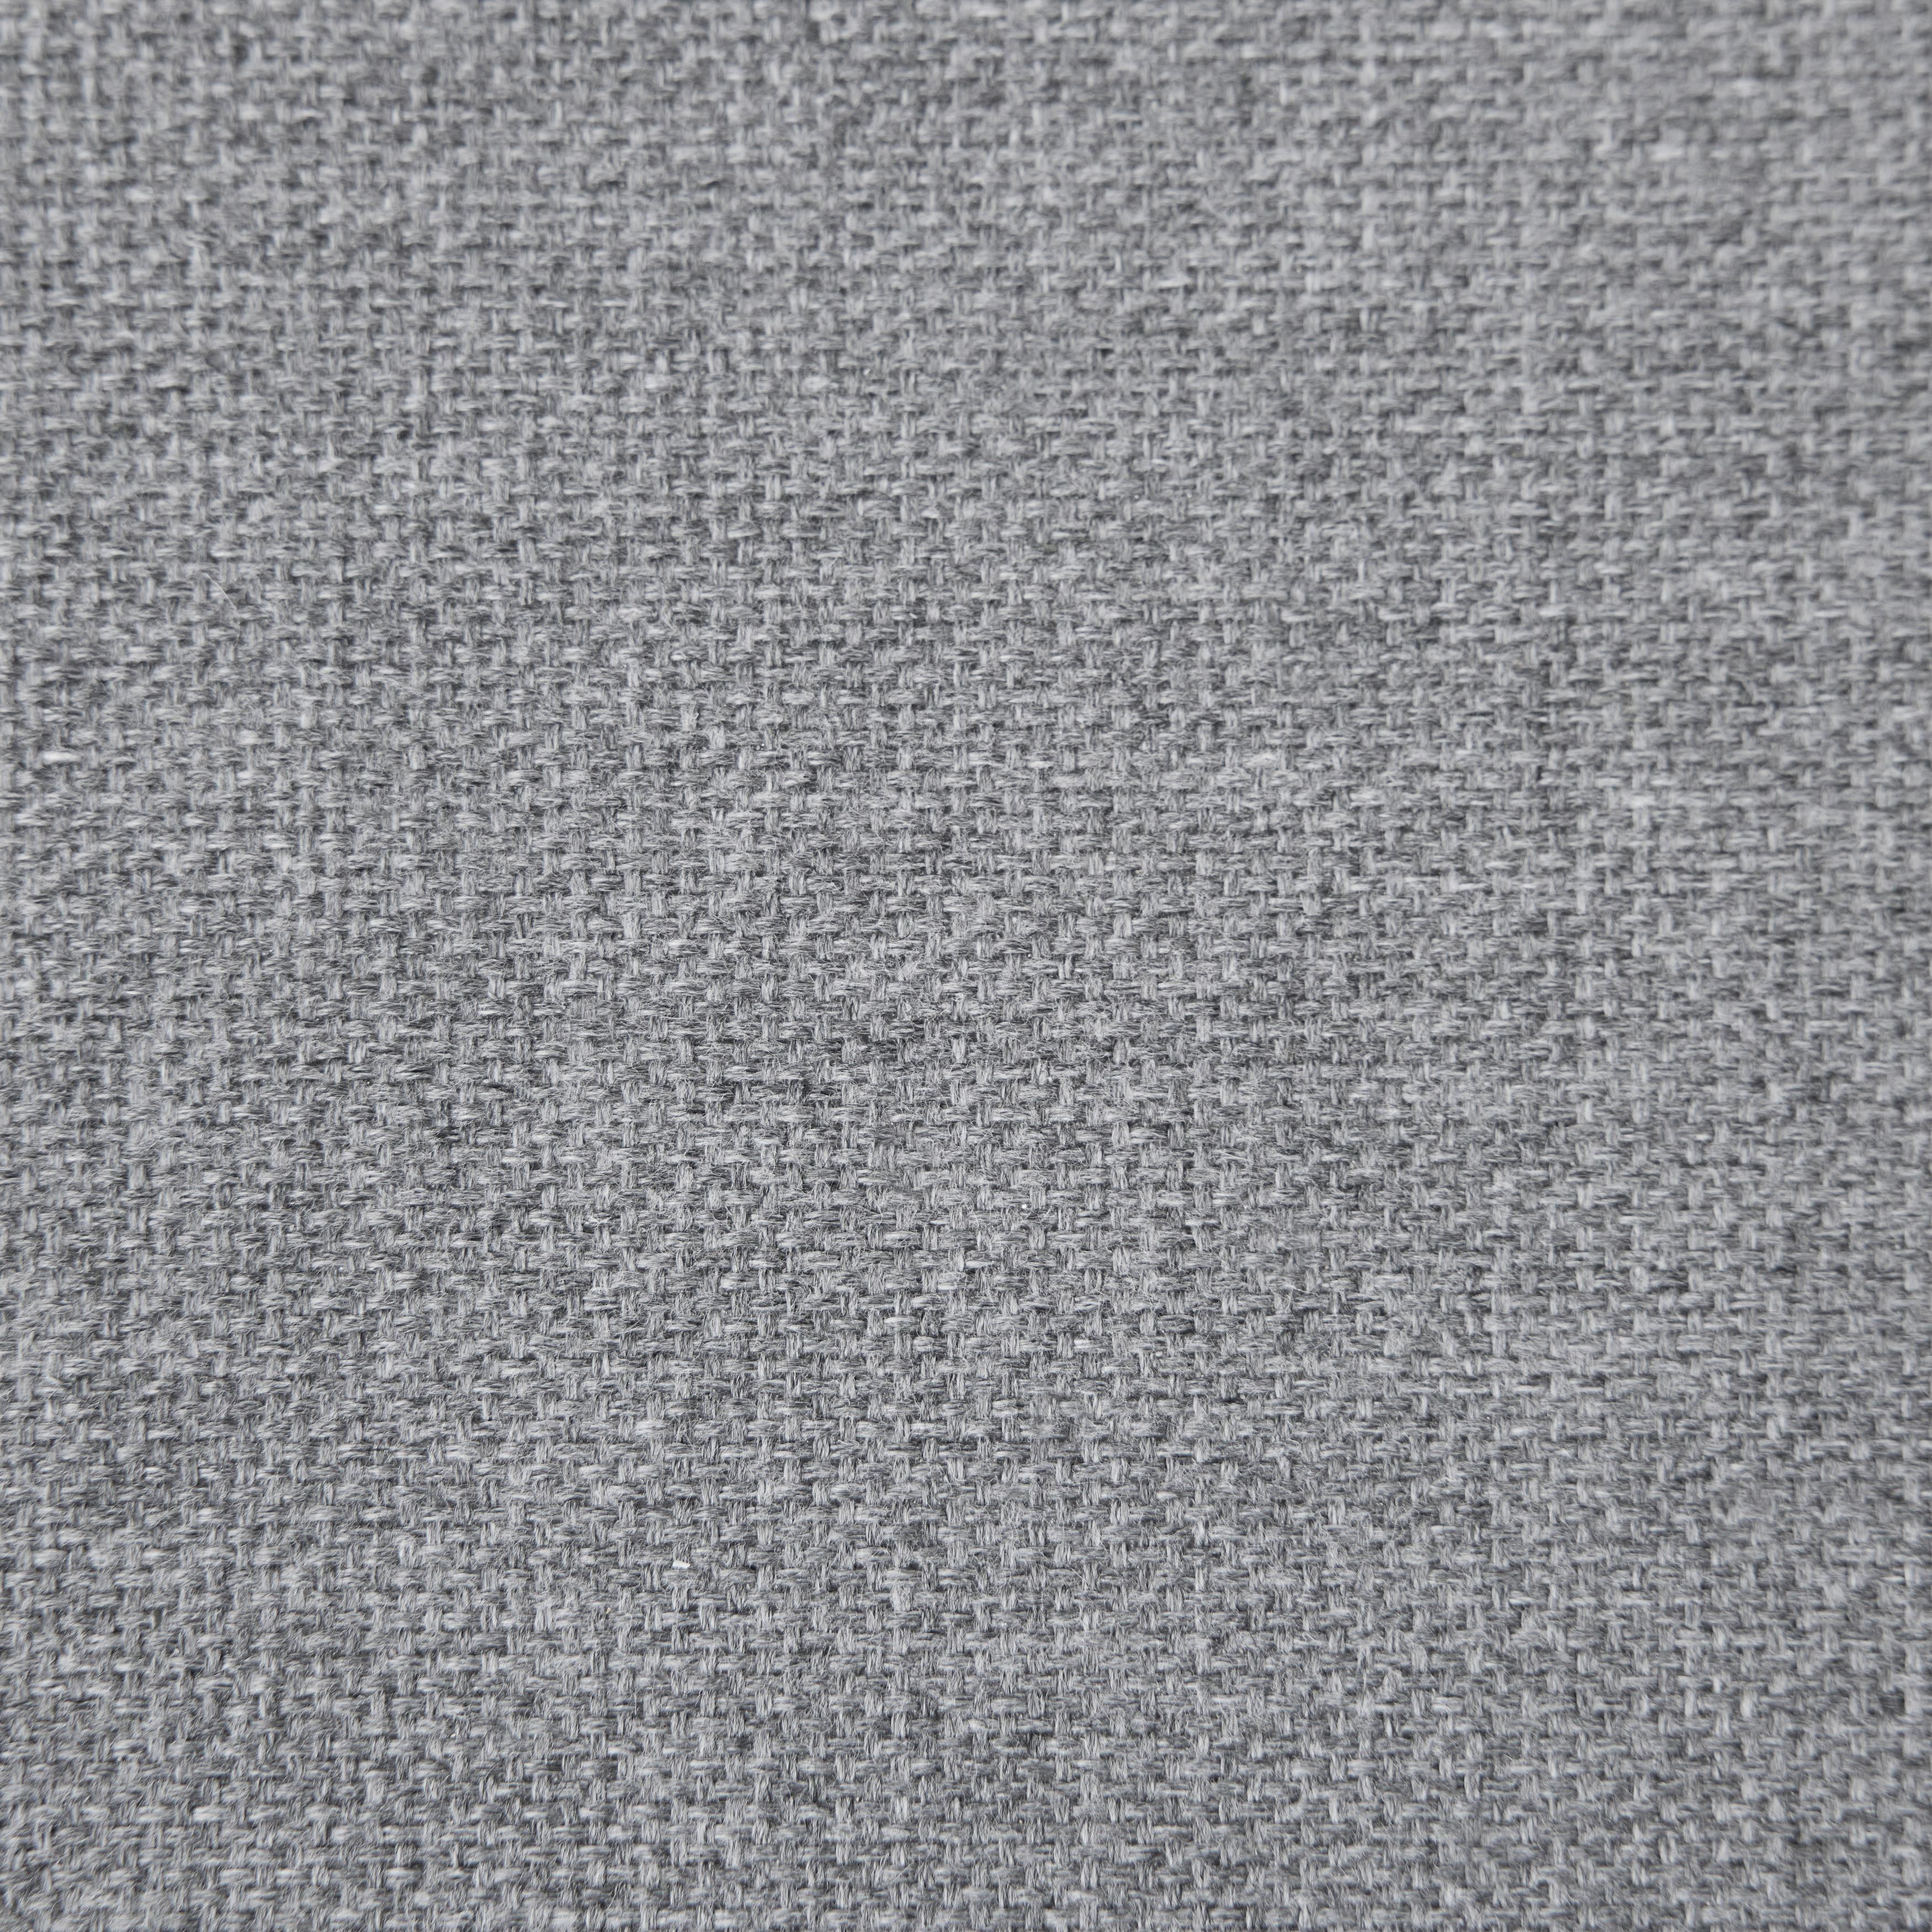 Loungegarnitur "Amaia", grau, Outdoorgewebe - Dunkelgrau/Grau, MODERN, Holz/Textil (253/323cm) - Bessagi Garden